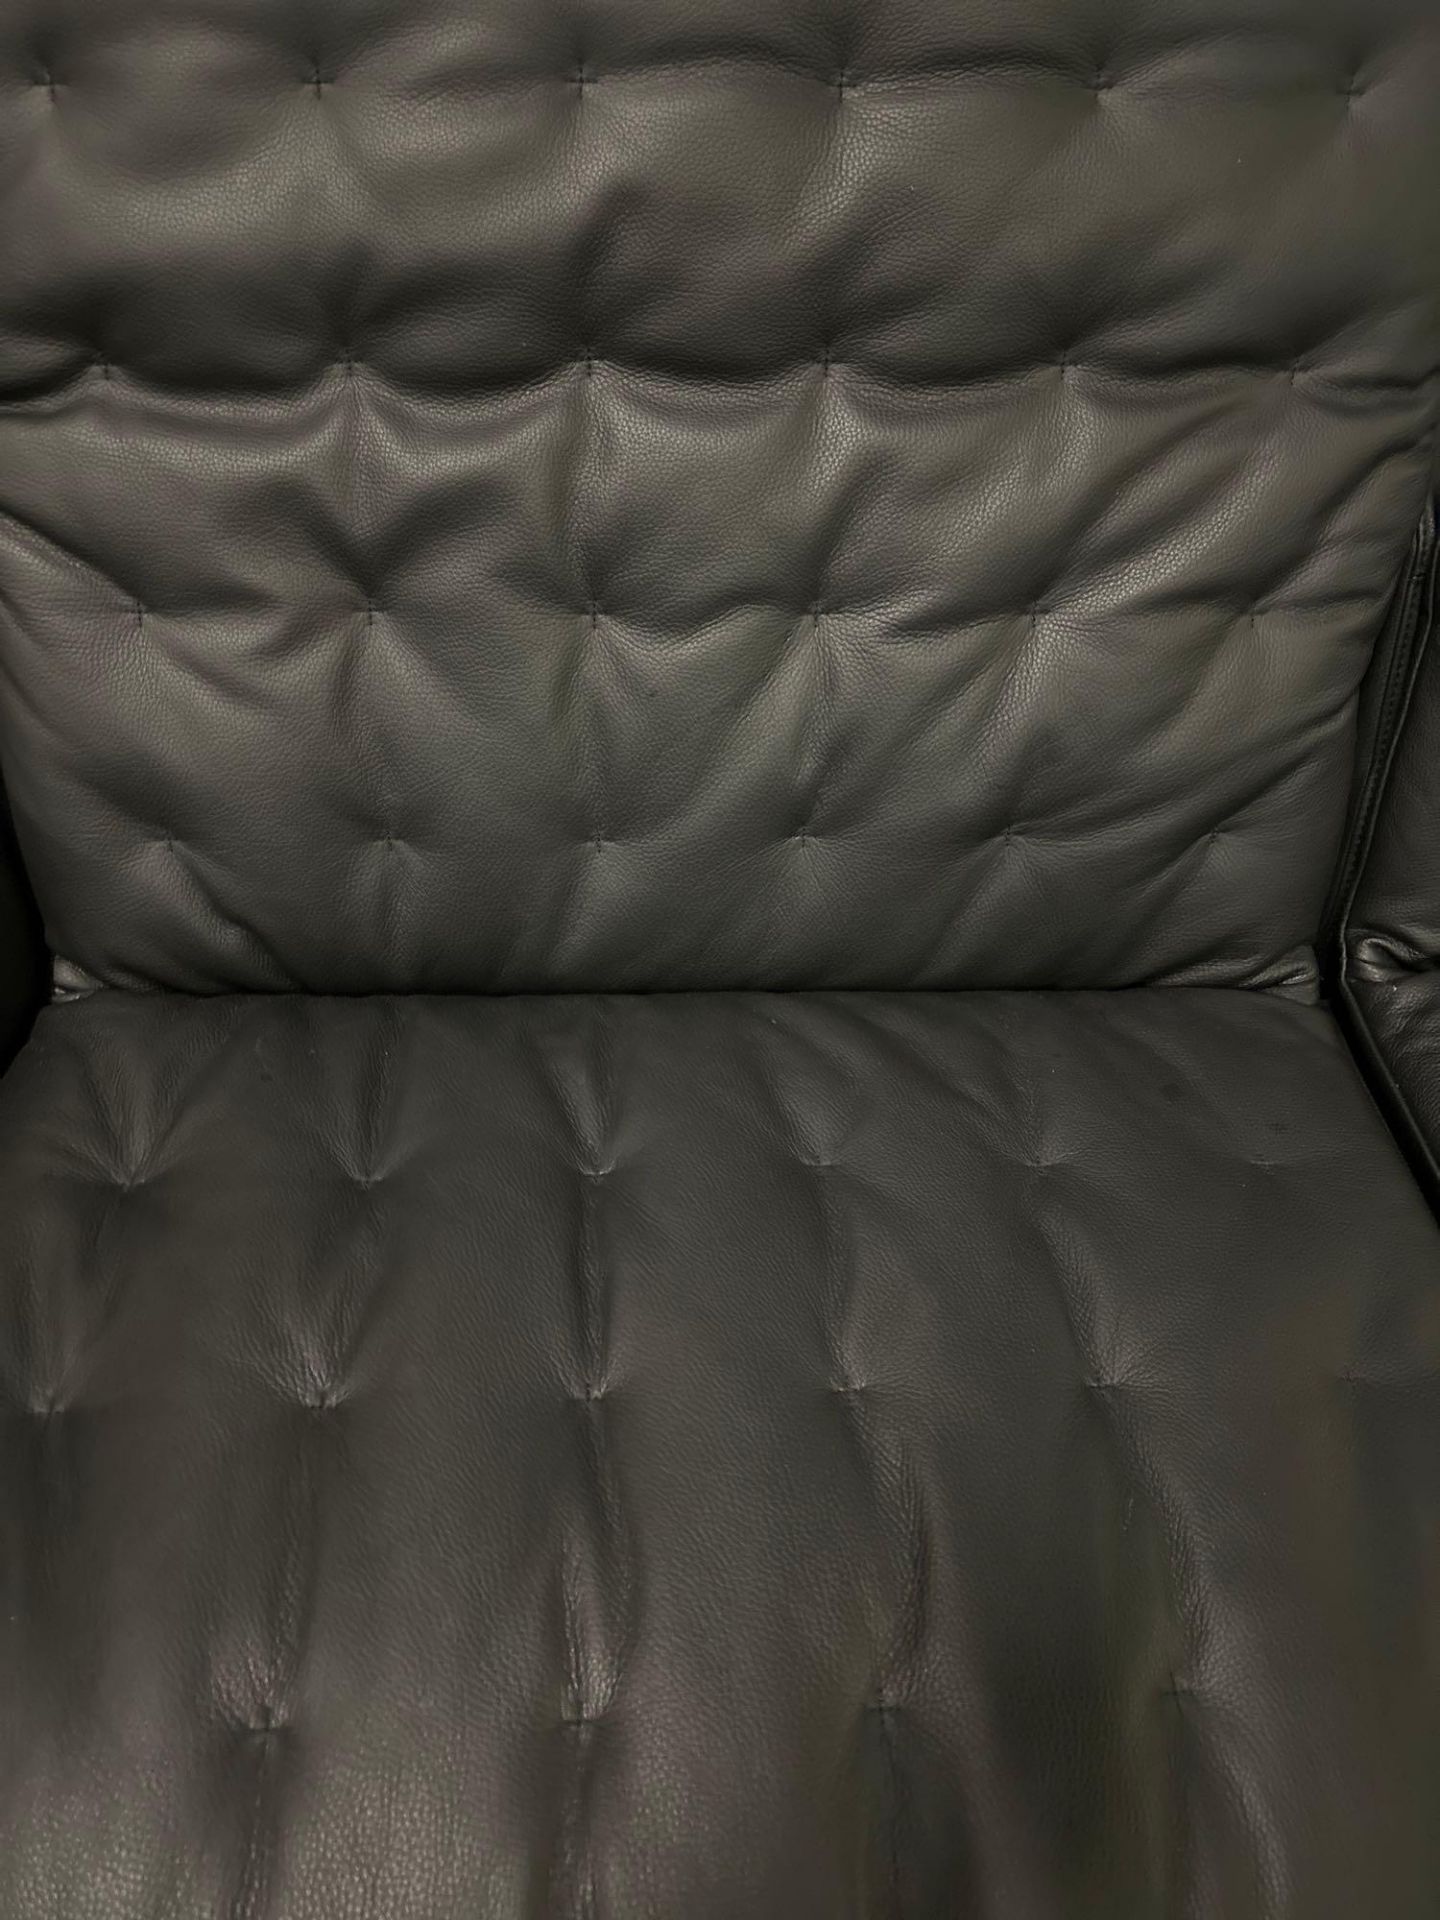 Satellite Sofa Designed By Sacha Lakic The Satellite Offers Seating Comfort On Demand. The Multi- - Bild 5 aus 6